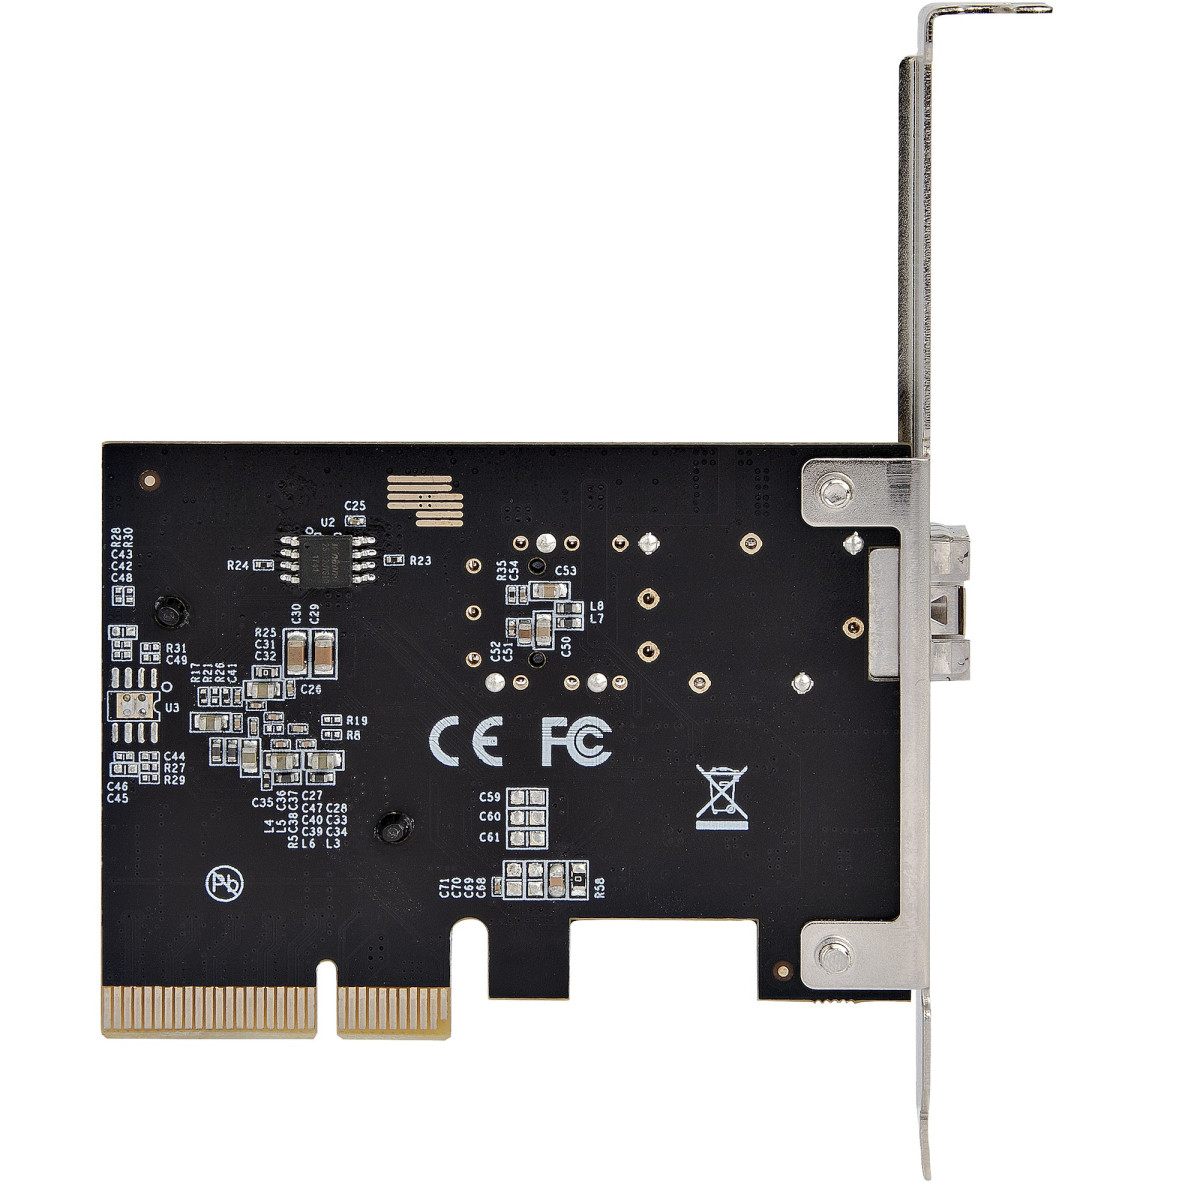 10G PCIe SFP+ Card Single Open SFP Port